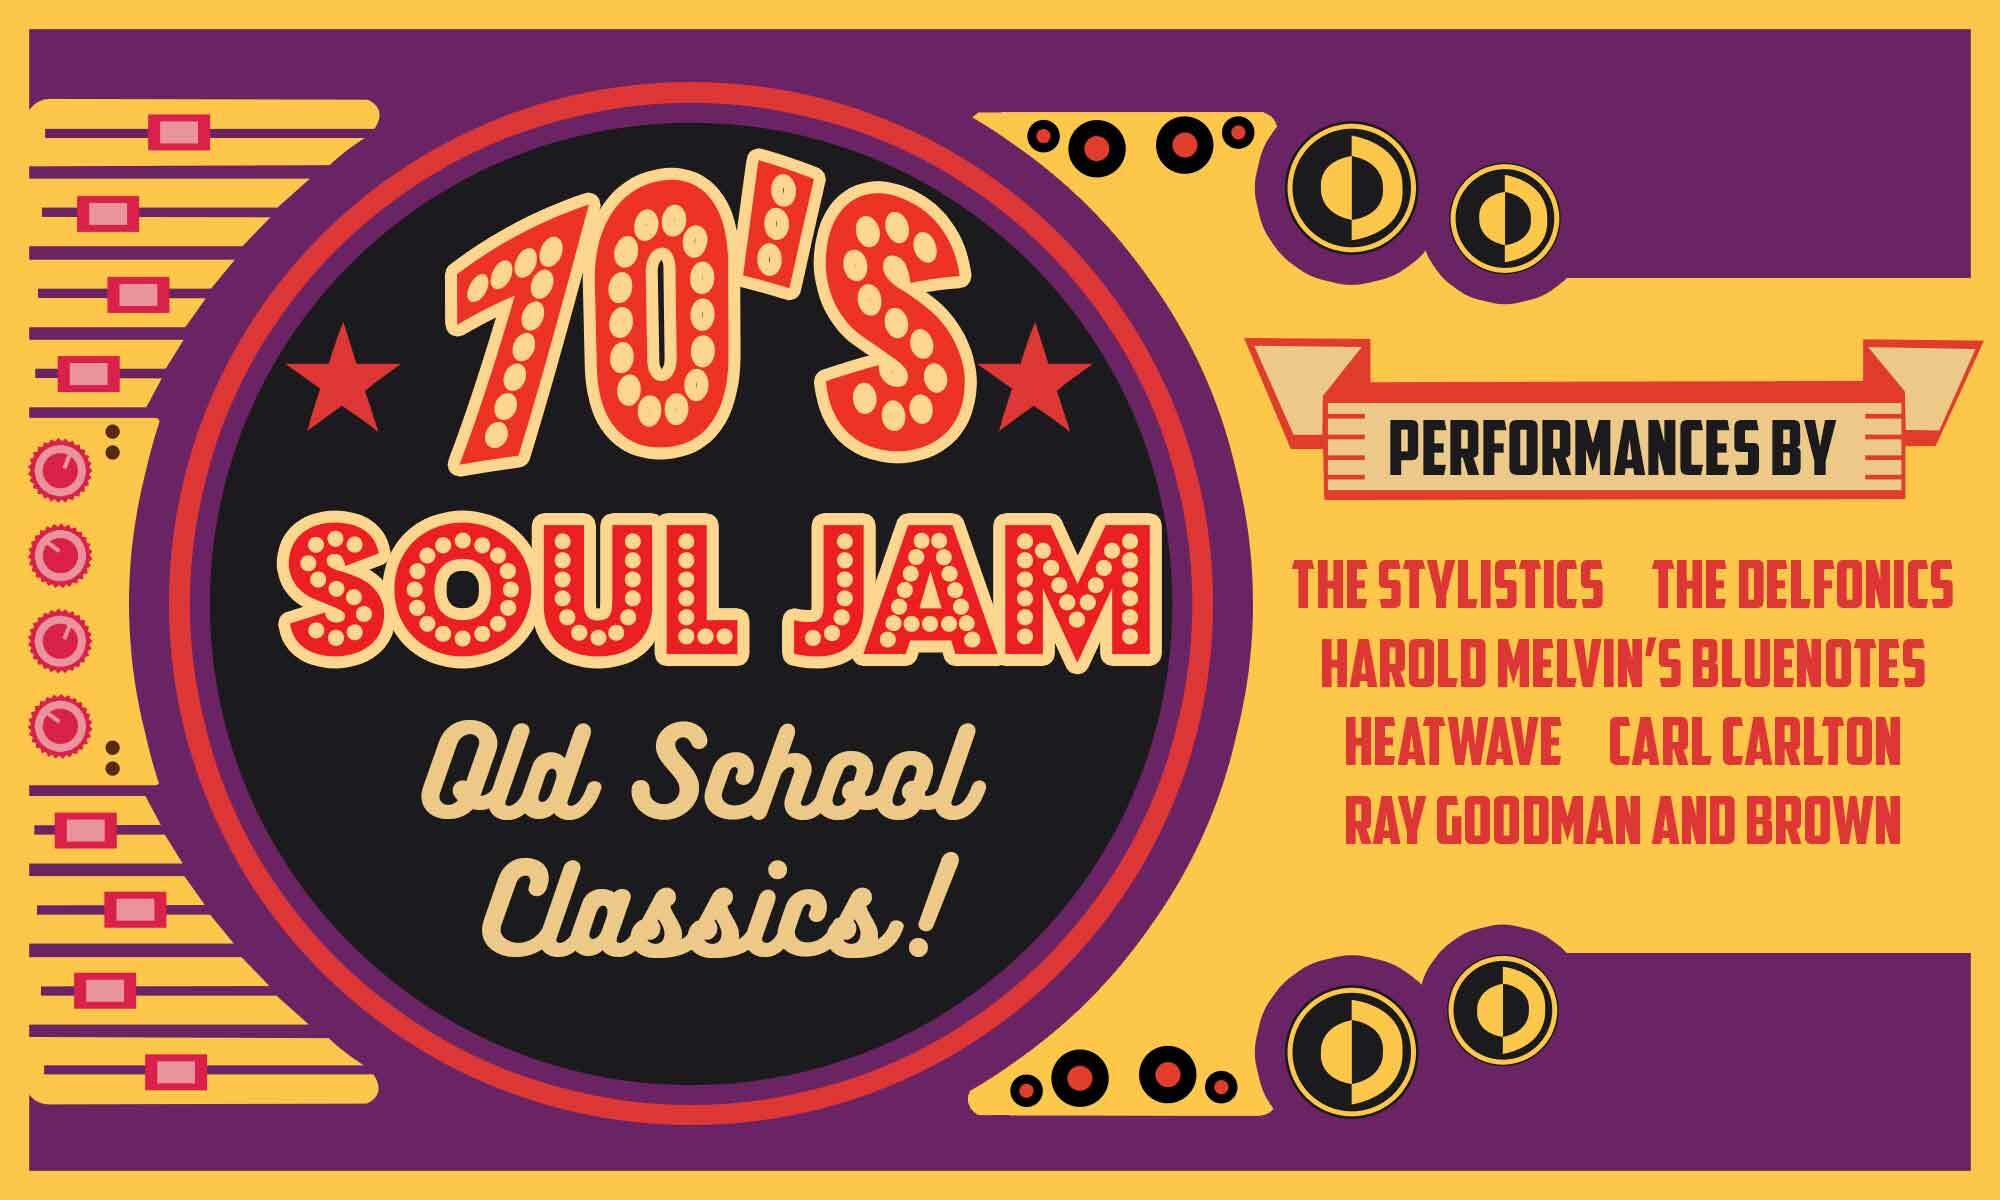 70's Soul Jam Live Show